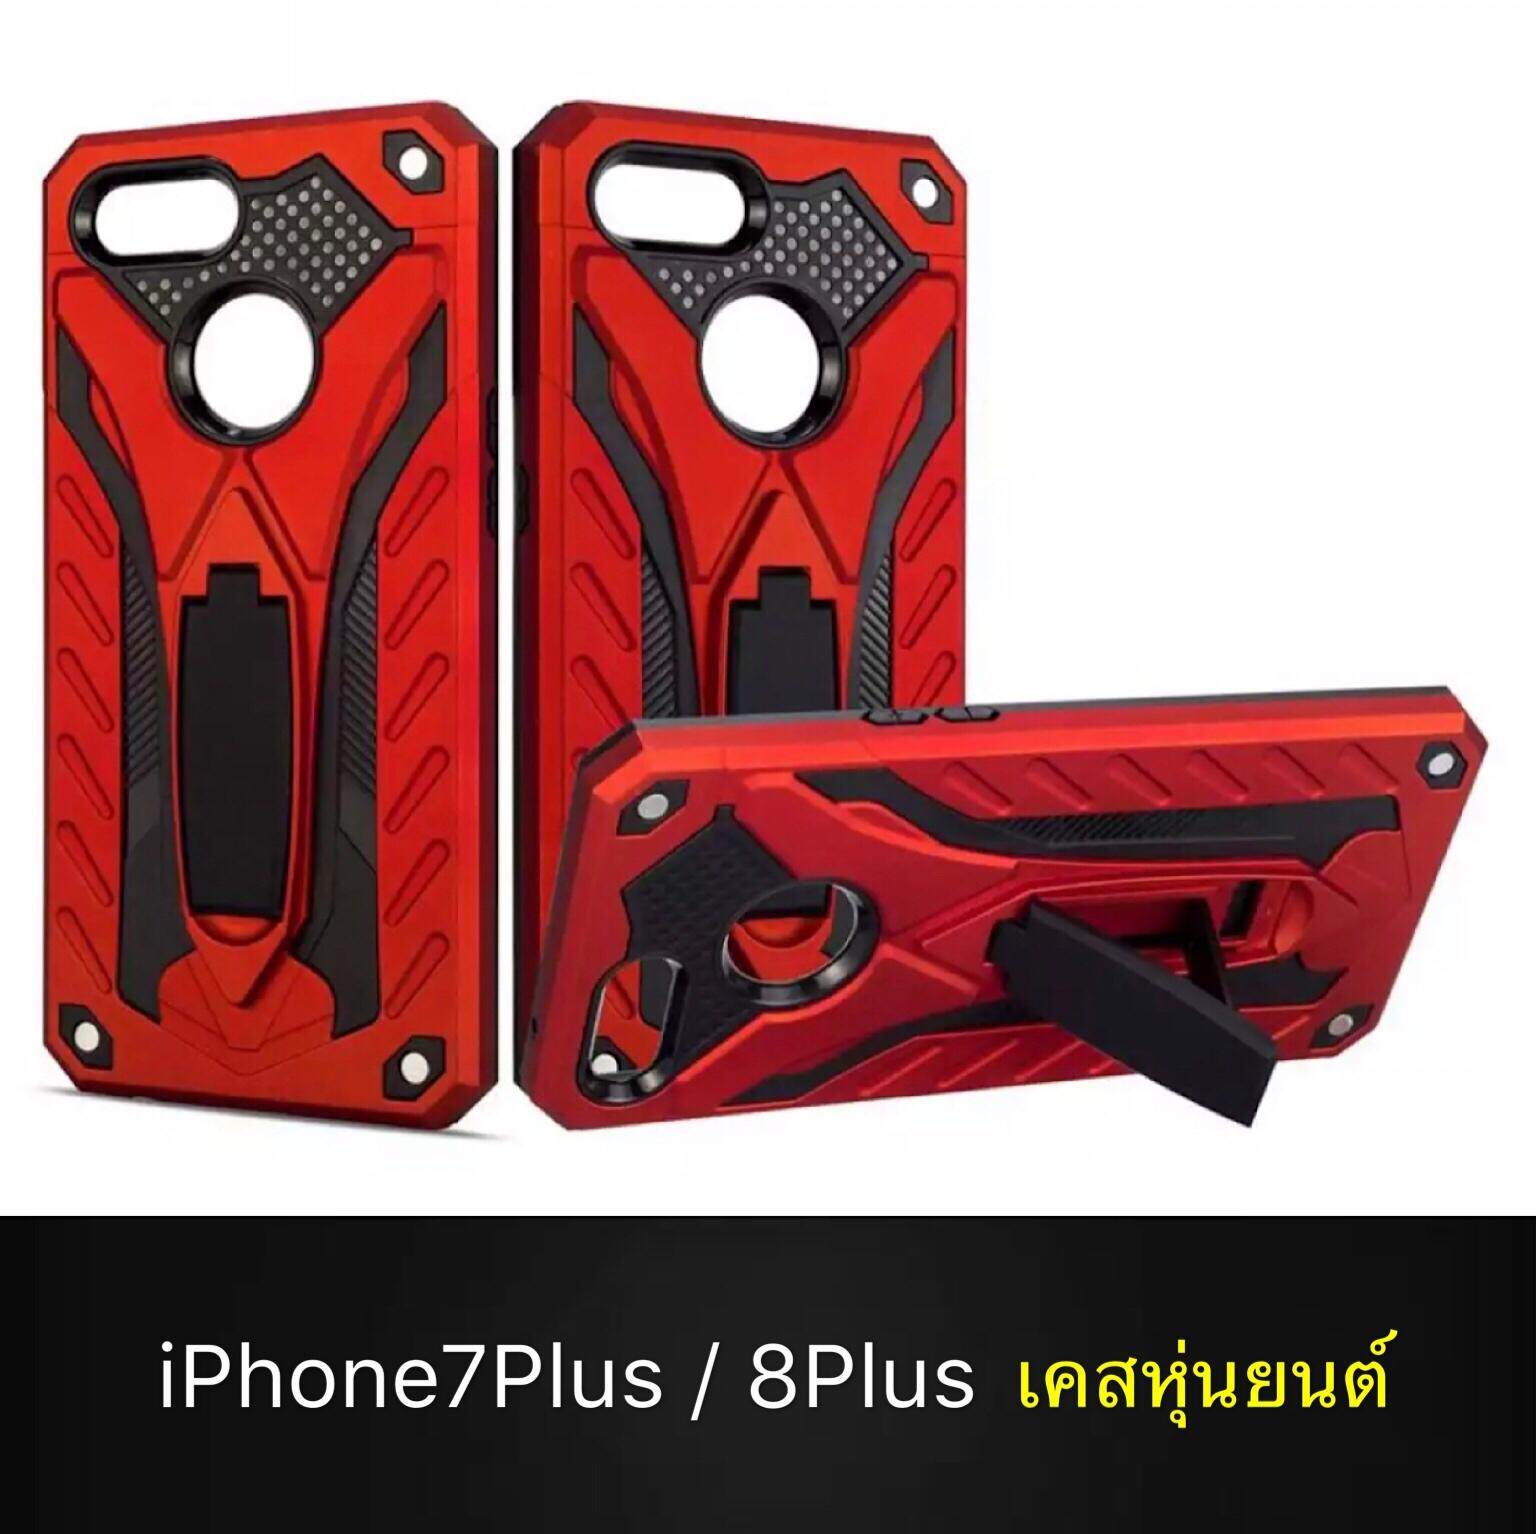 Case iPhone7Plus / 8Plus เคสไอโฟน6 iPhone 7Plus / 8plus เคสหุ่นยนต์ เคสไฮบริด มีขาตั้ง เคสกันกระแทก สินค้าใหม่ TPU CASE สี สีแดง